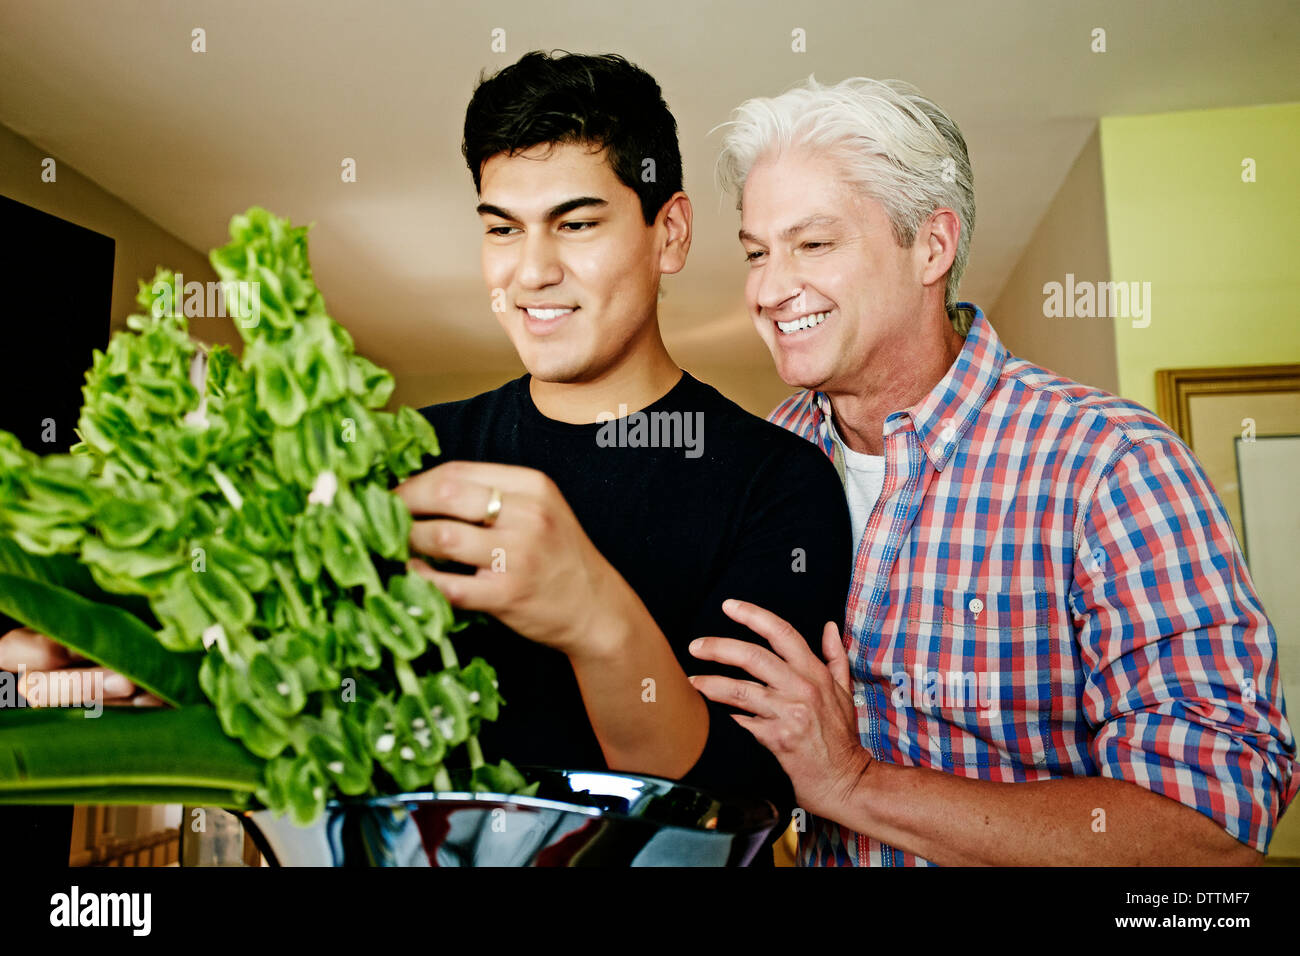 Homosexual couple arranging flowers Stock Photo